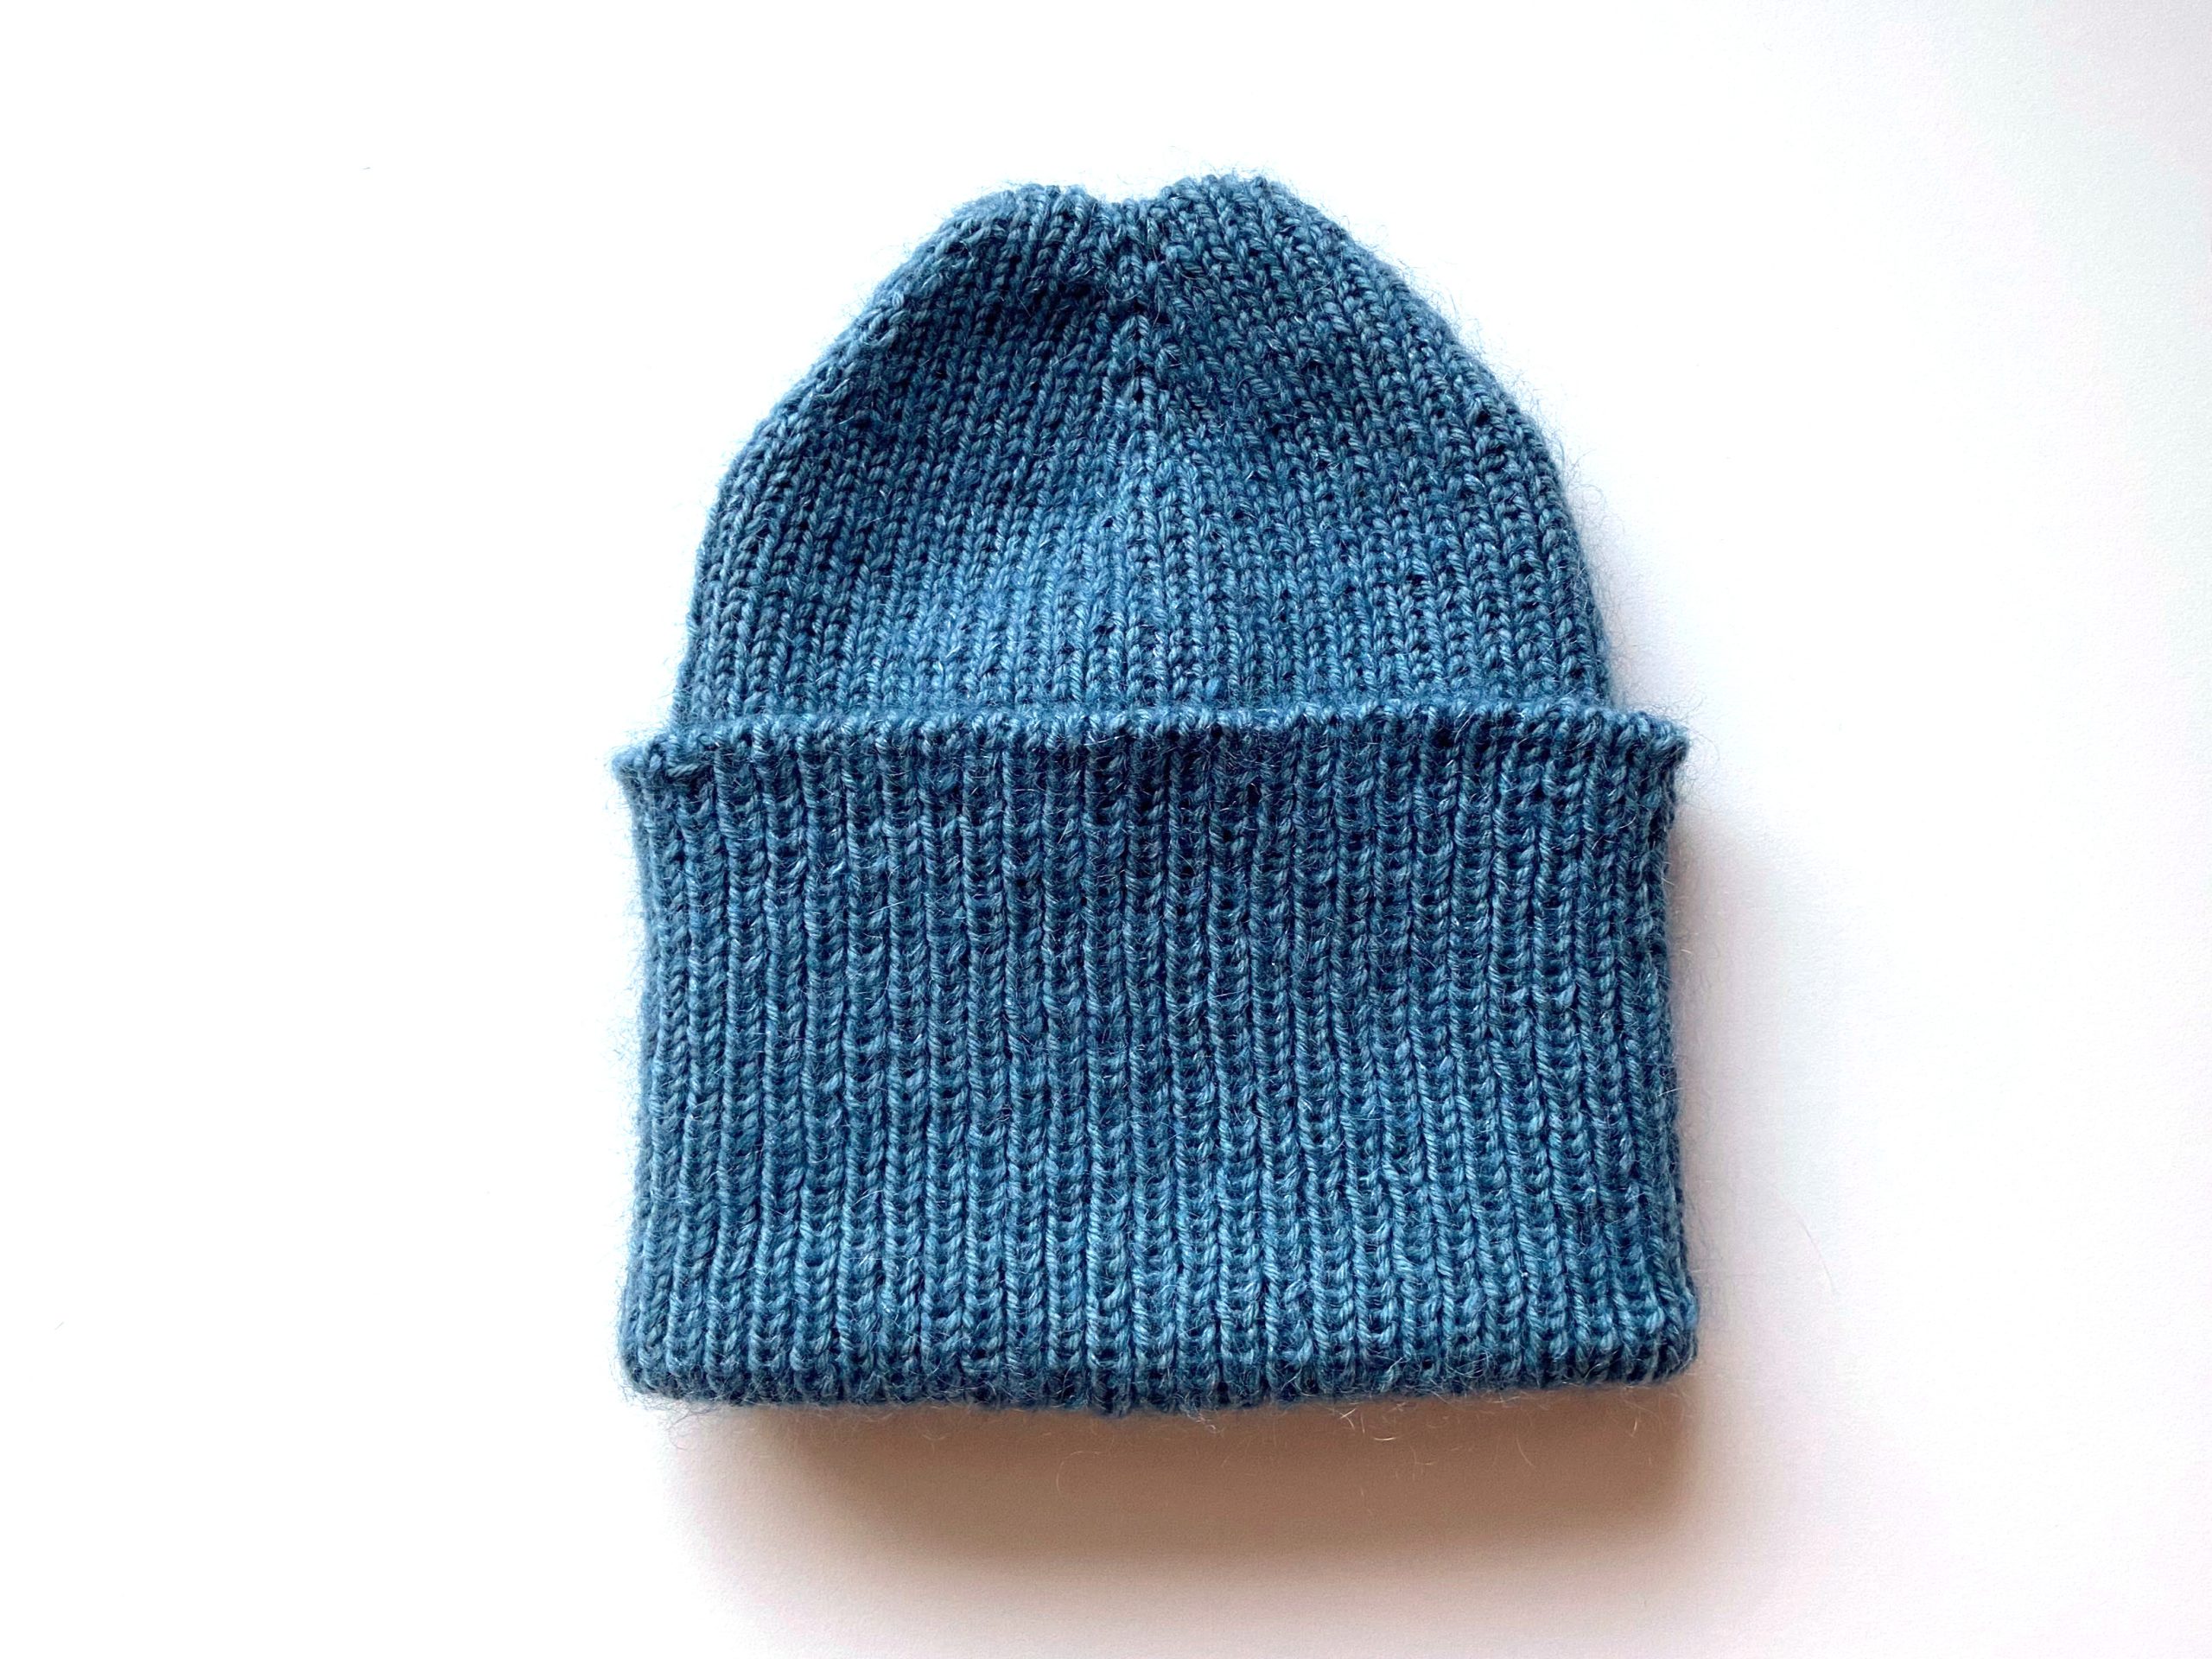 Ribbed Mohair Hat [FREE Knitting Pattern] - Knitgrammer